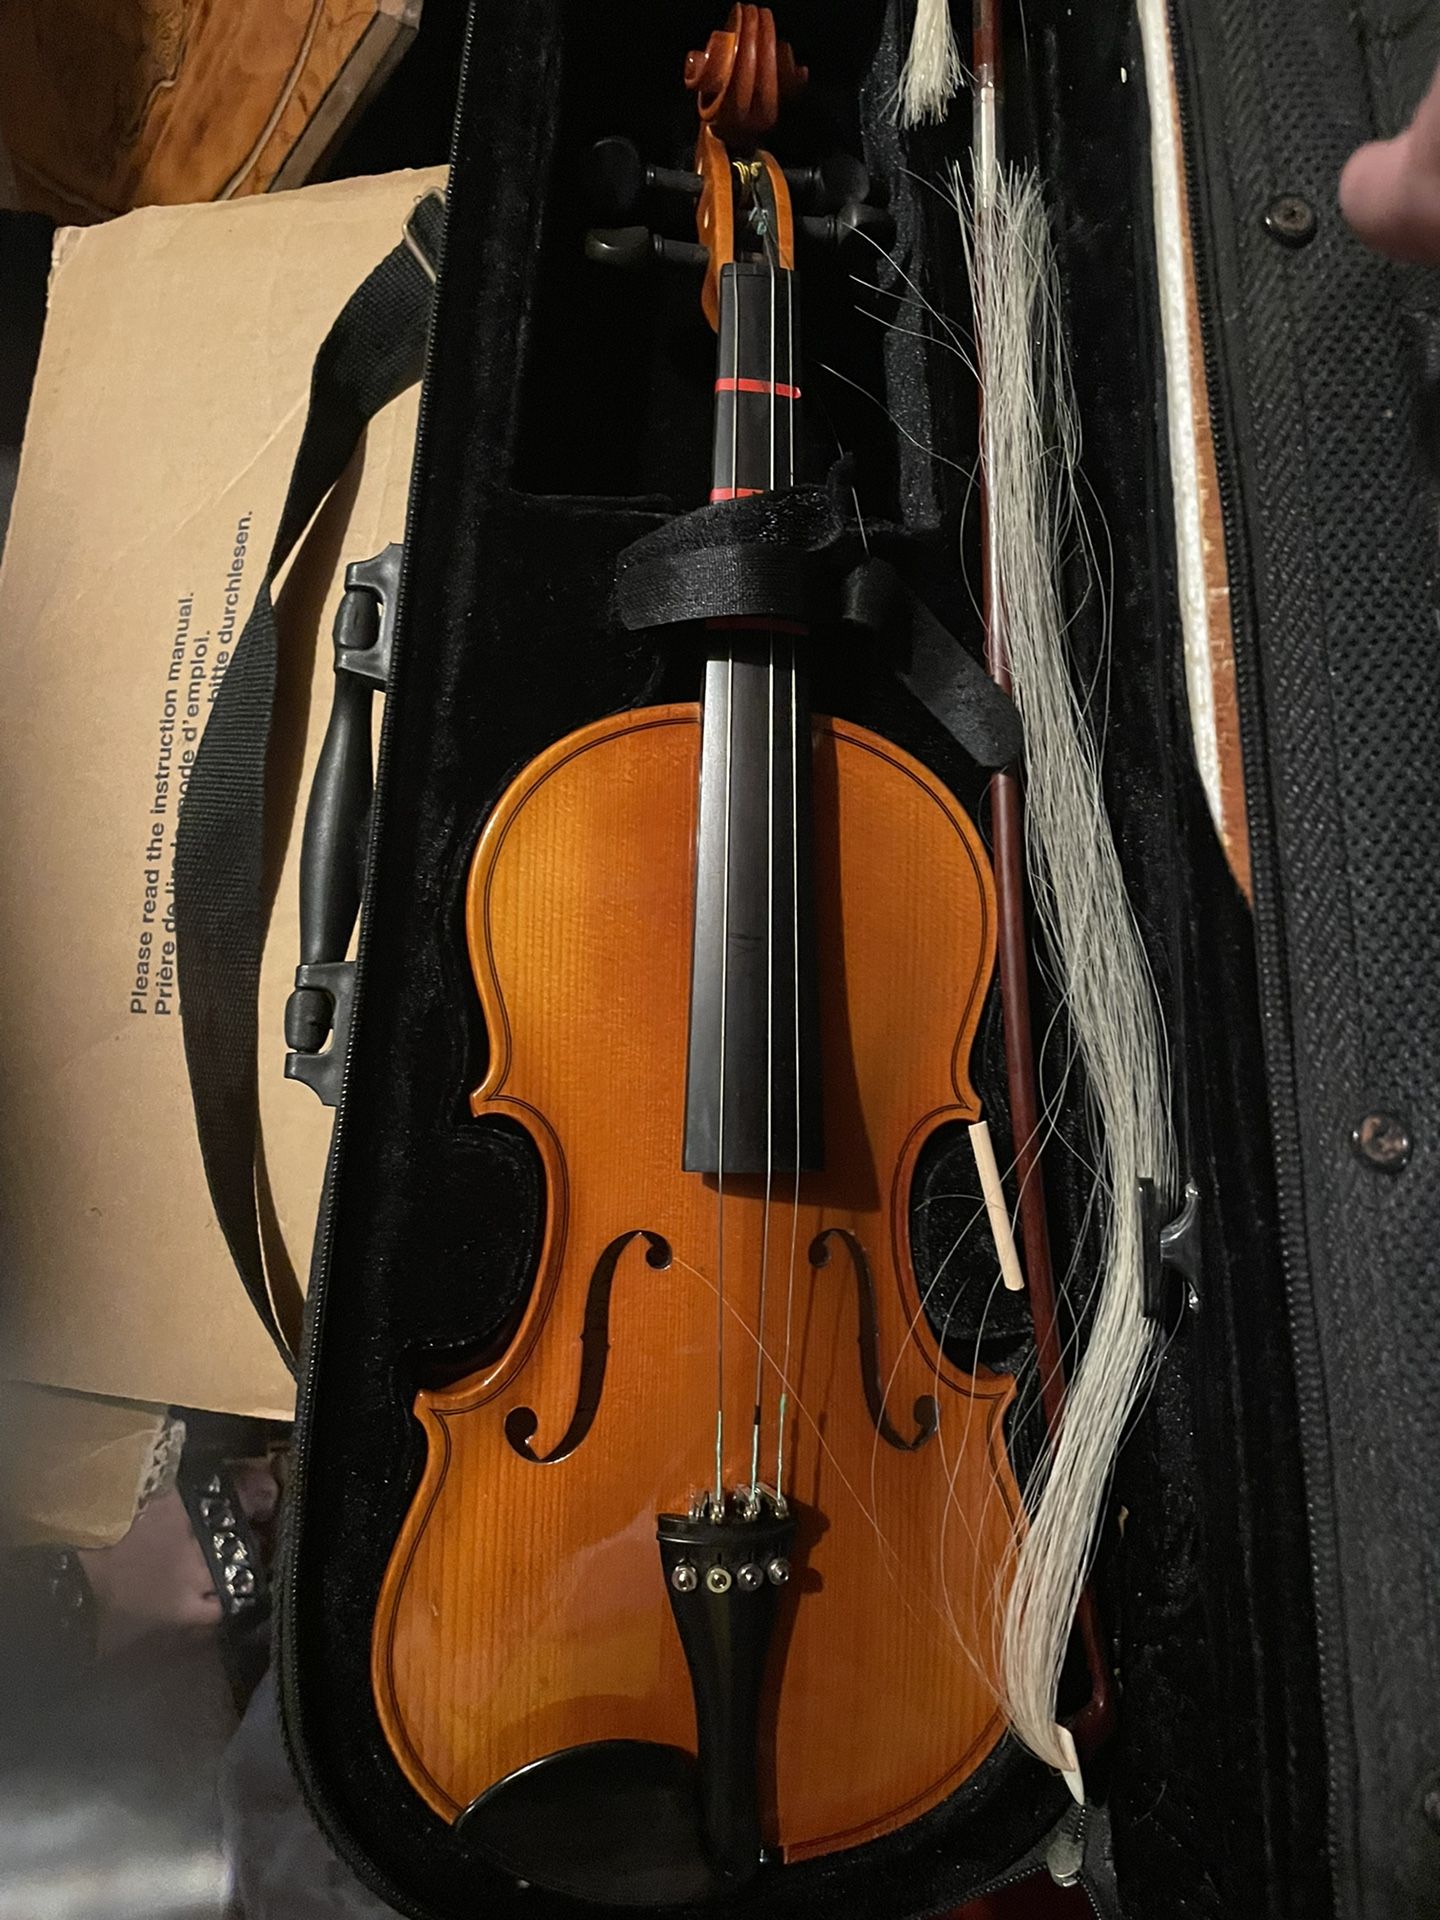 Violin Needs Strings Replaced 